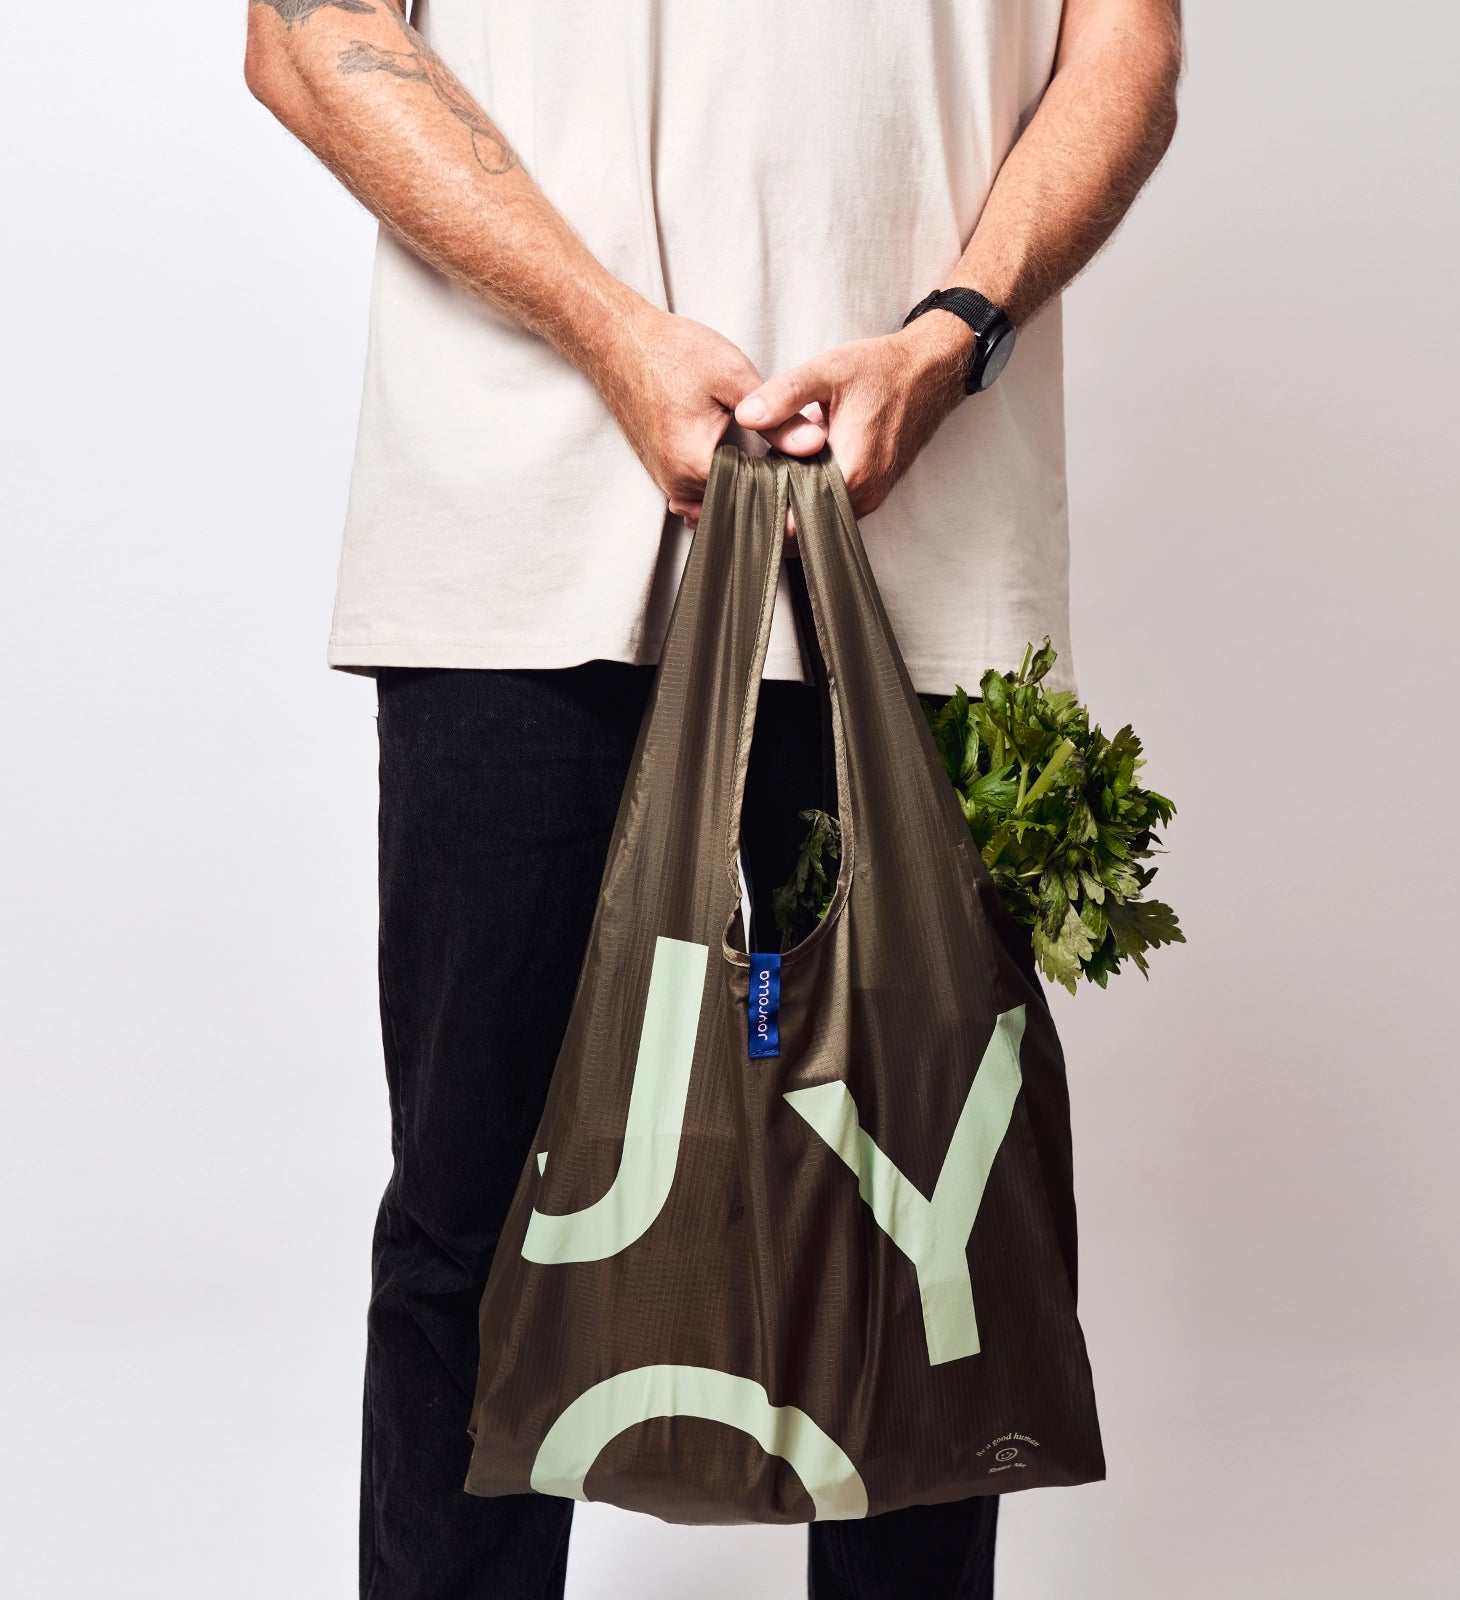 Reusable Bag - Olive